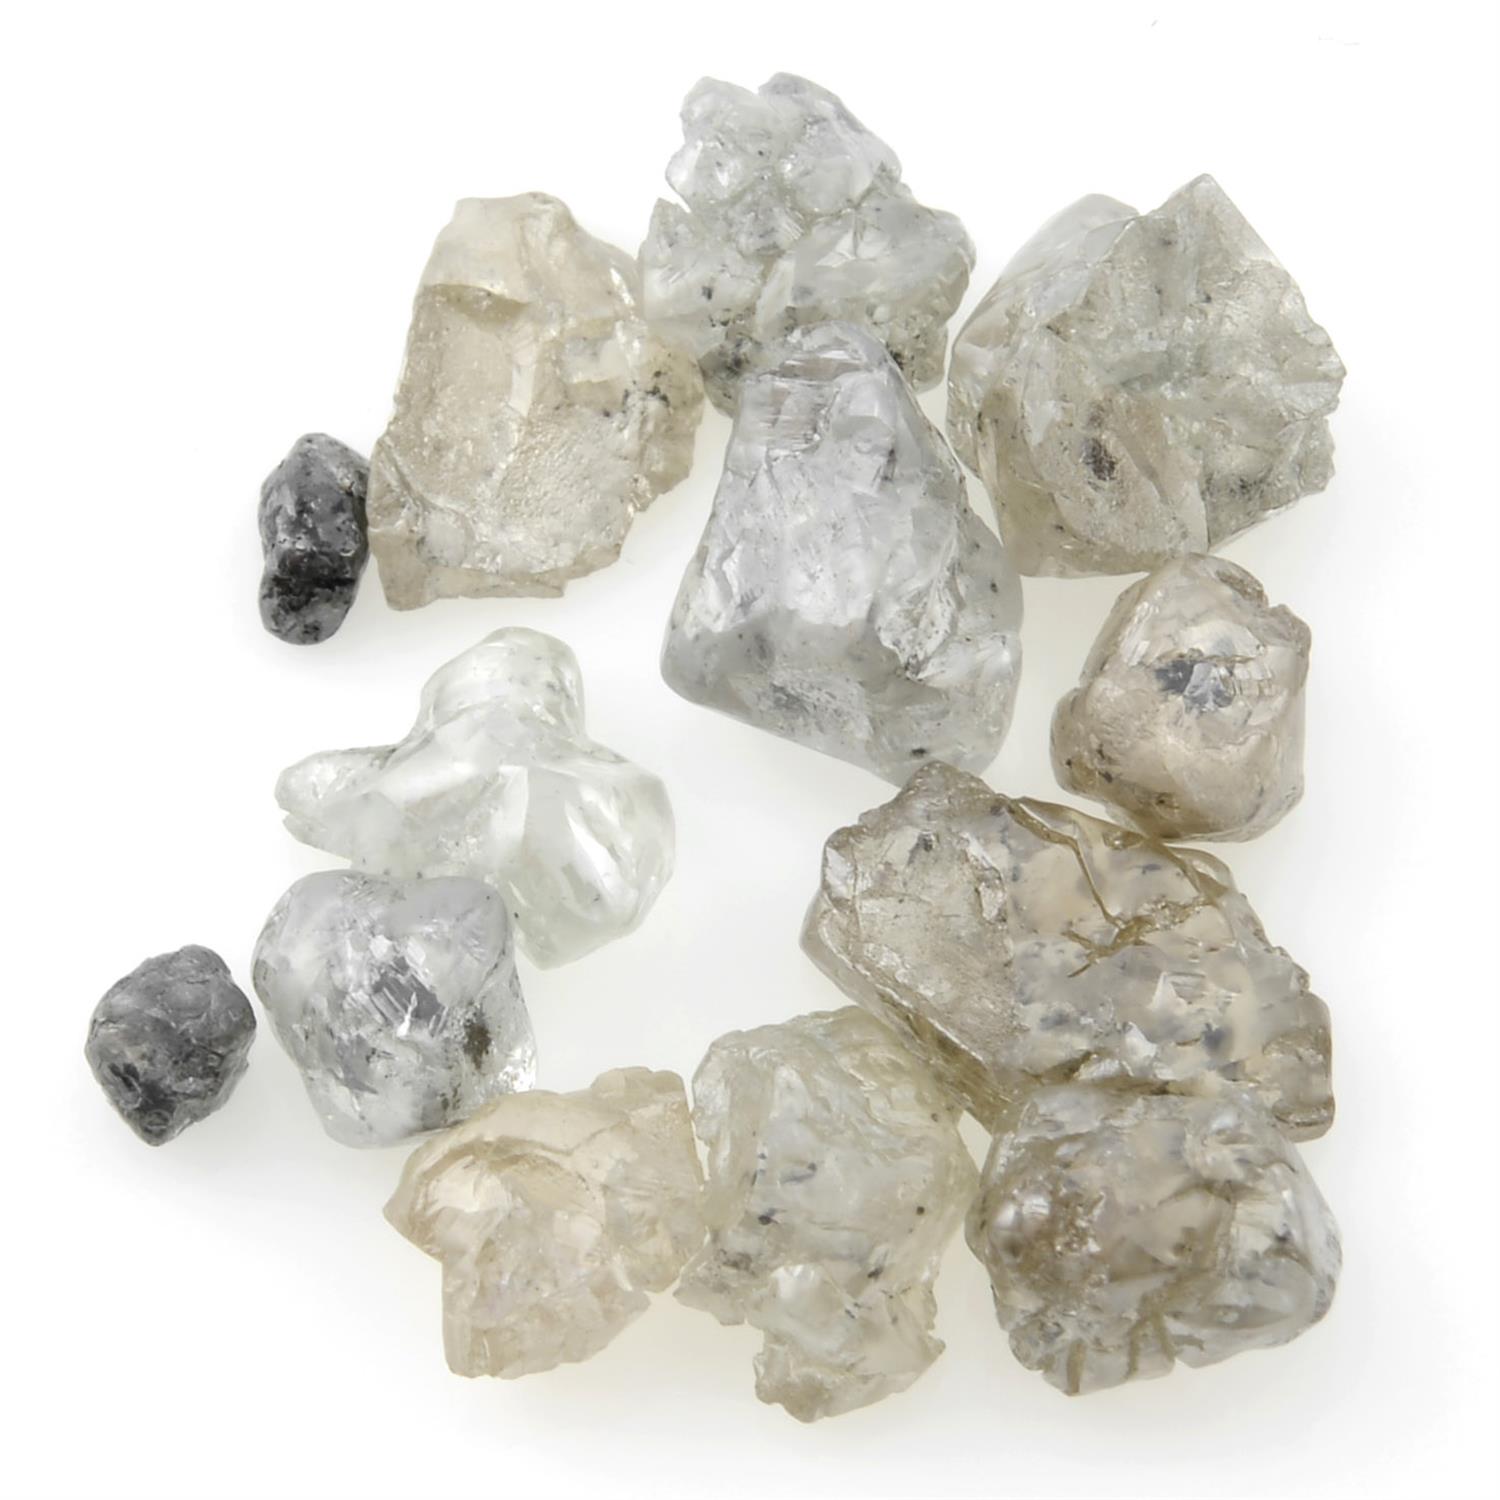 STUART DEVLIN STOCK - Selection of rough diamonds, weighing 78.99ct